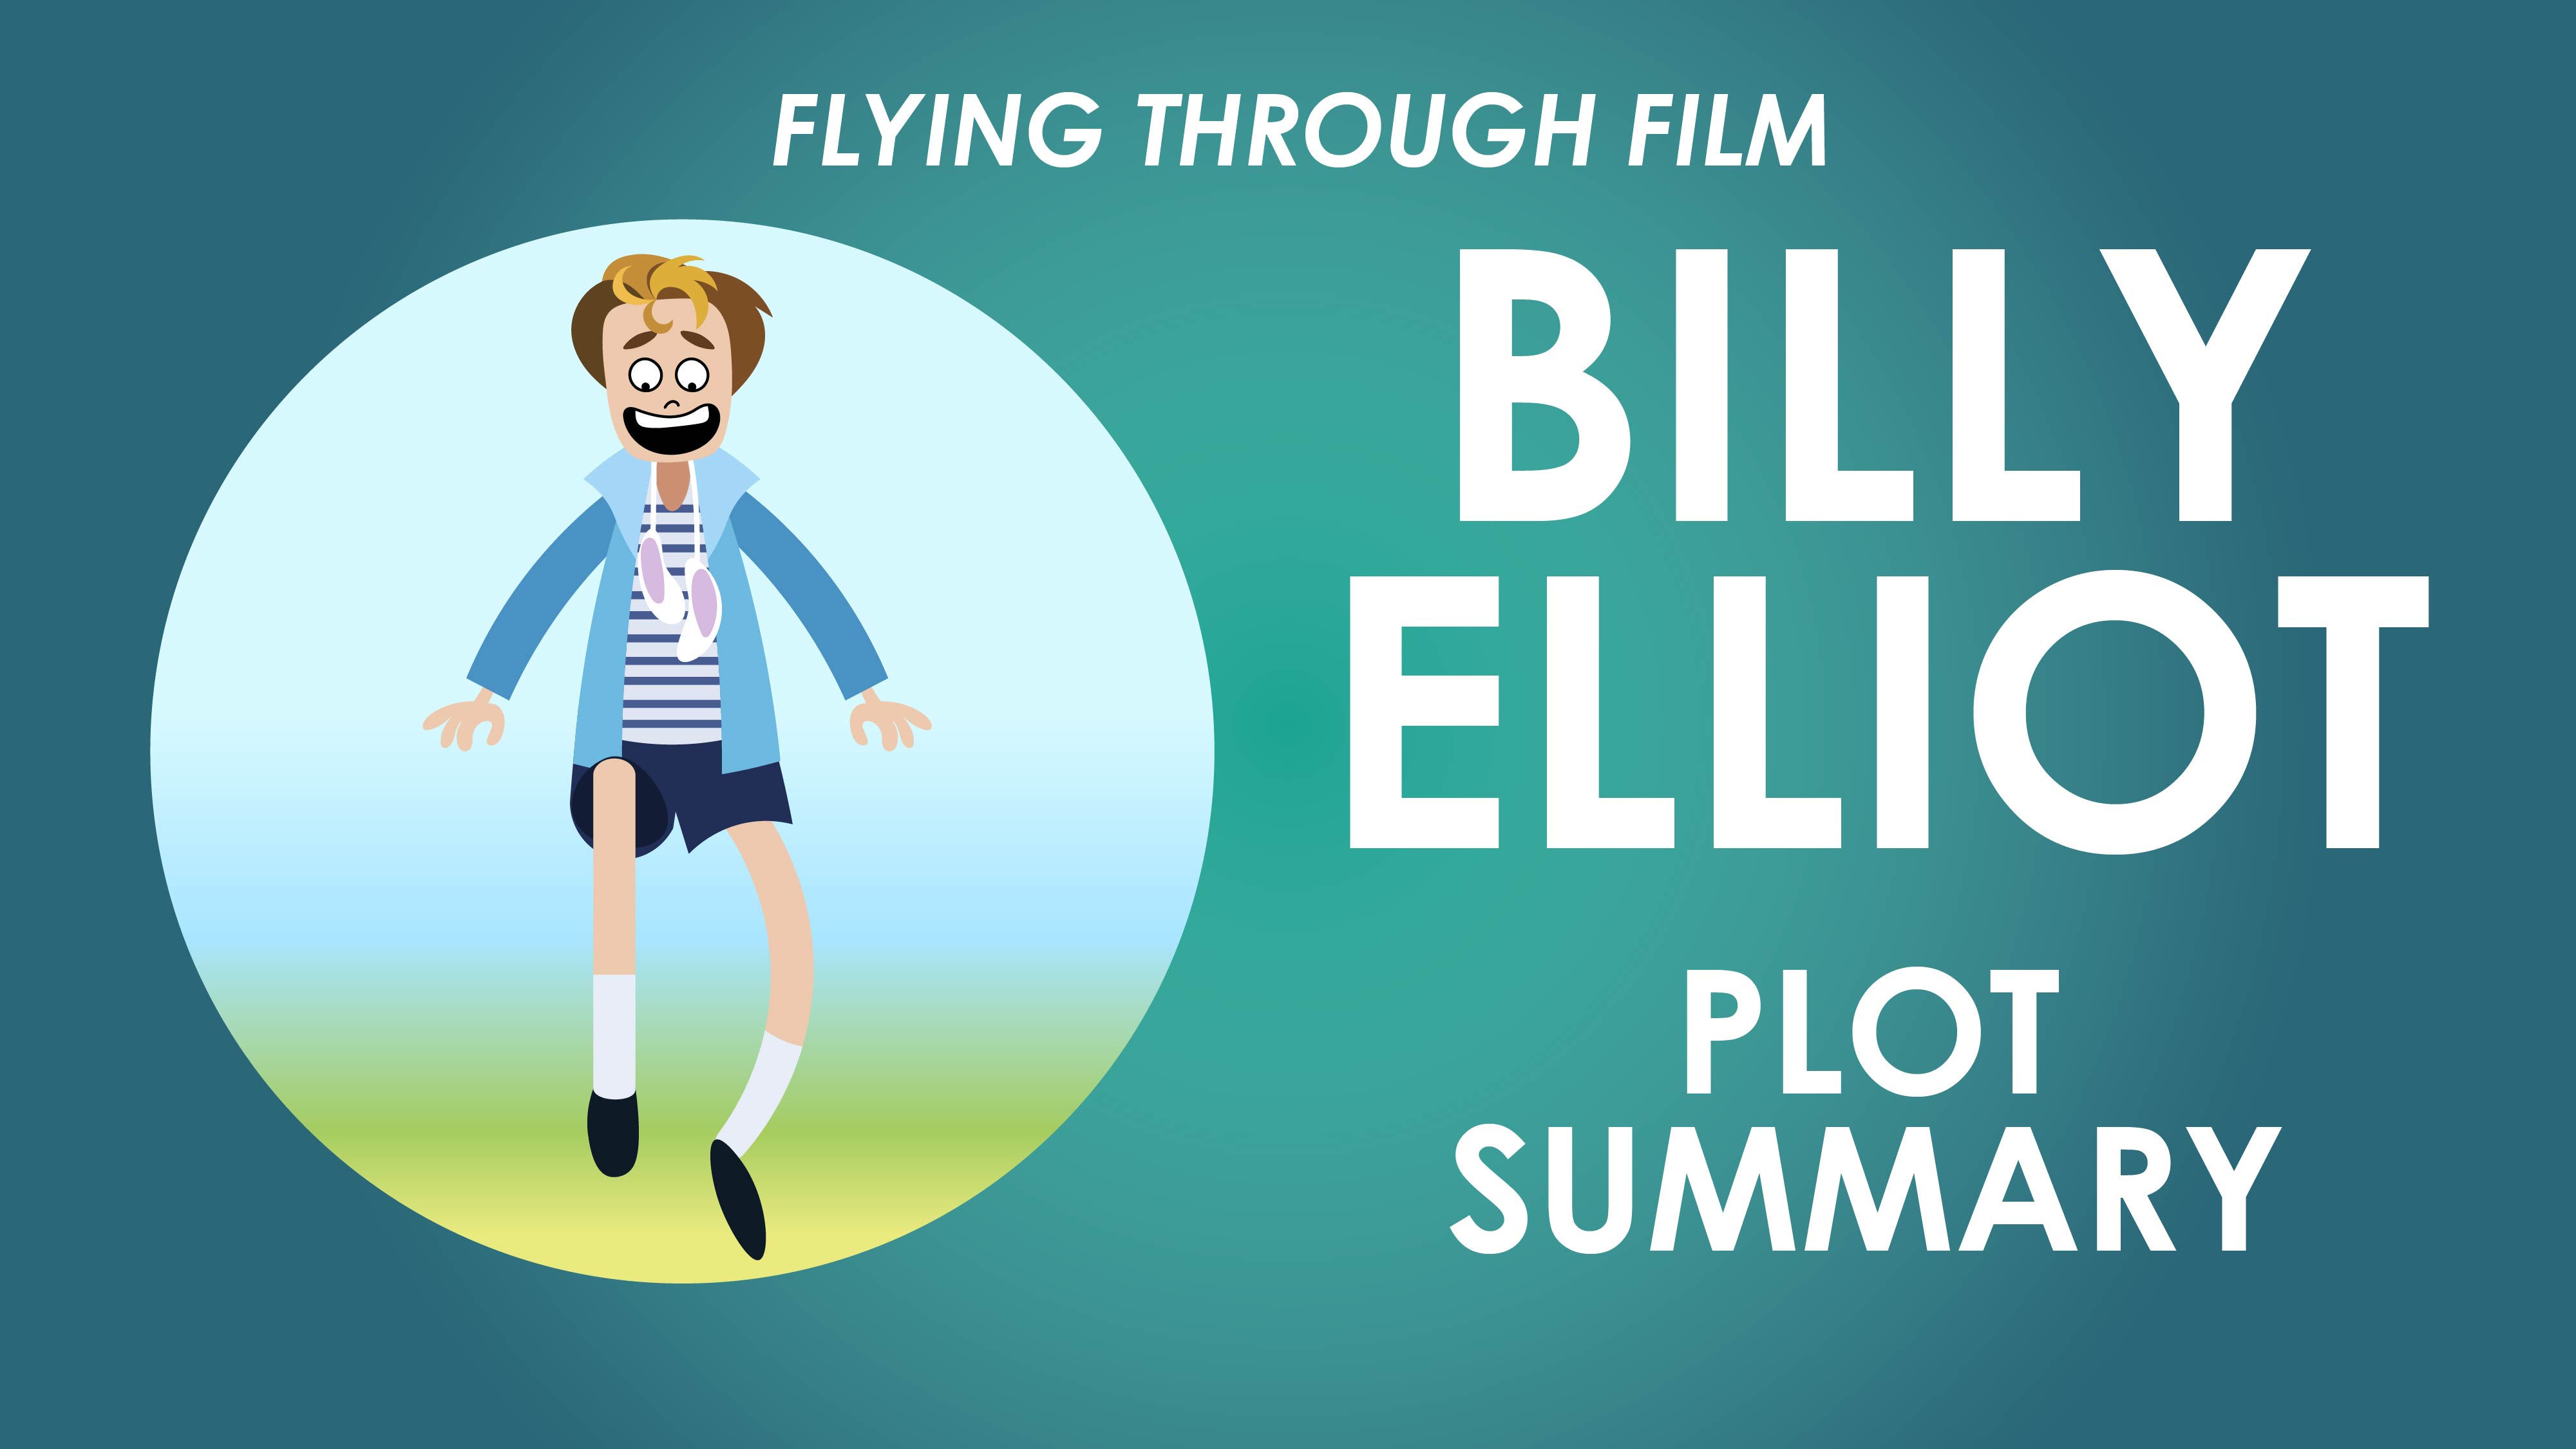 Billy Elliot - Plot Summary - Flying Through Film Series  